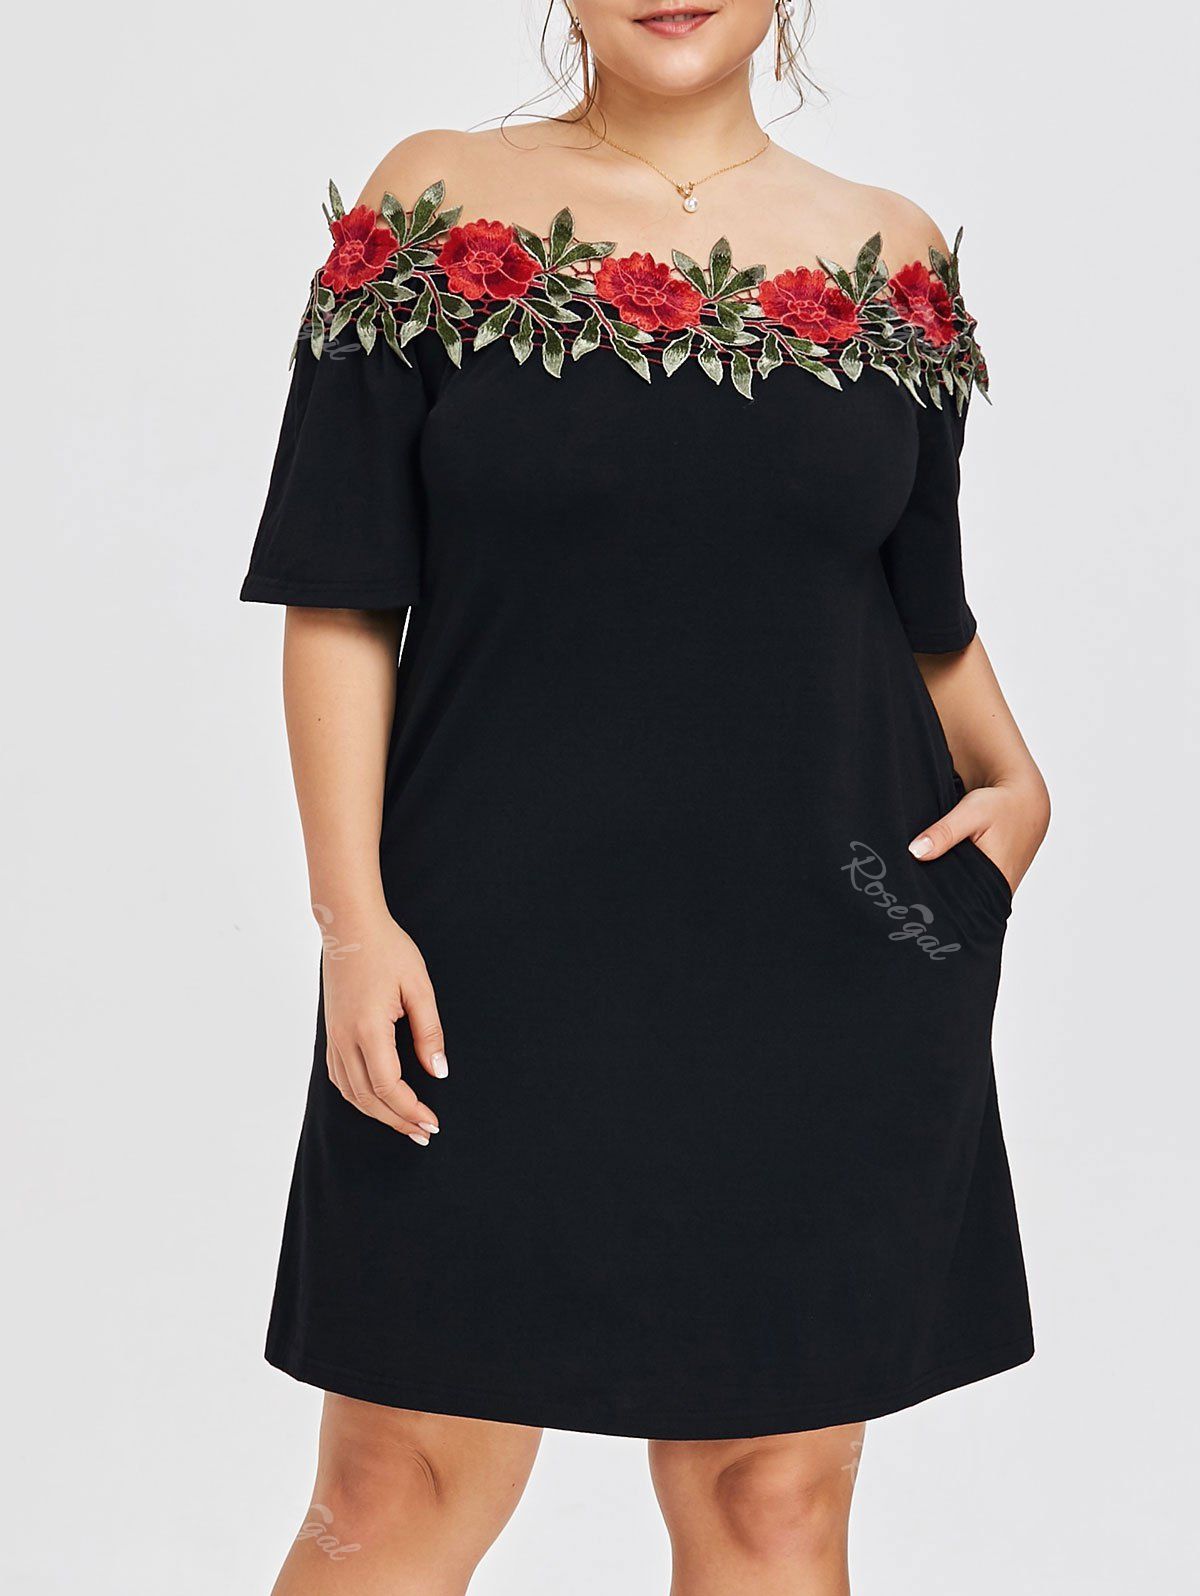 Fancy Plus Size Floral Embroidery Shift Dress  